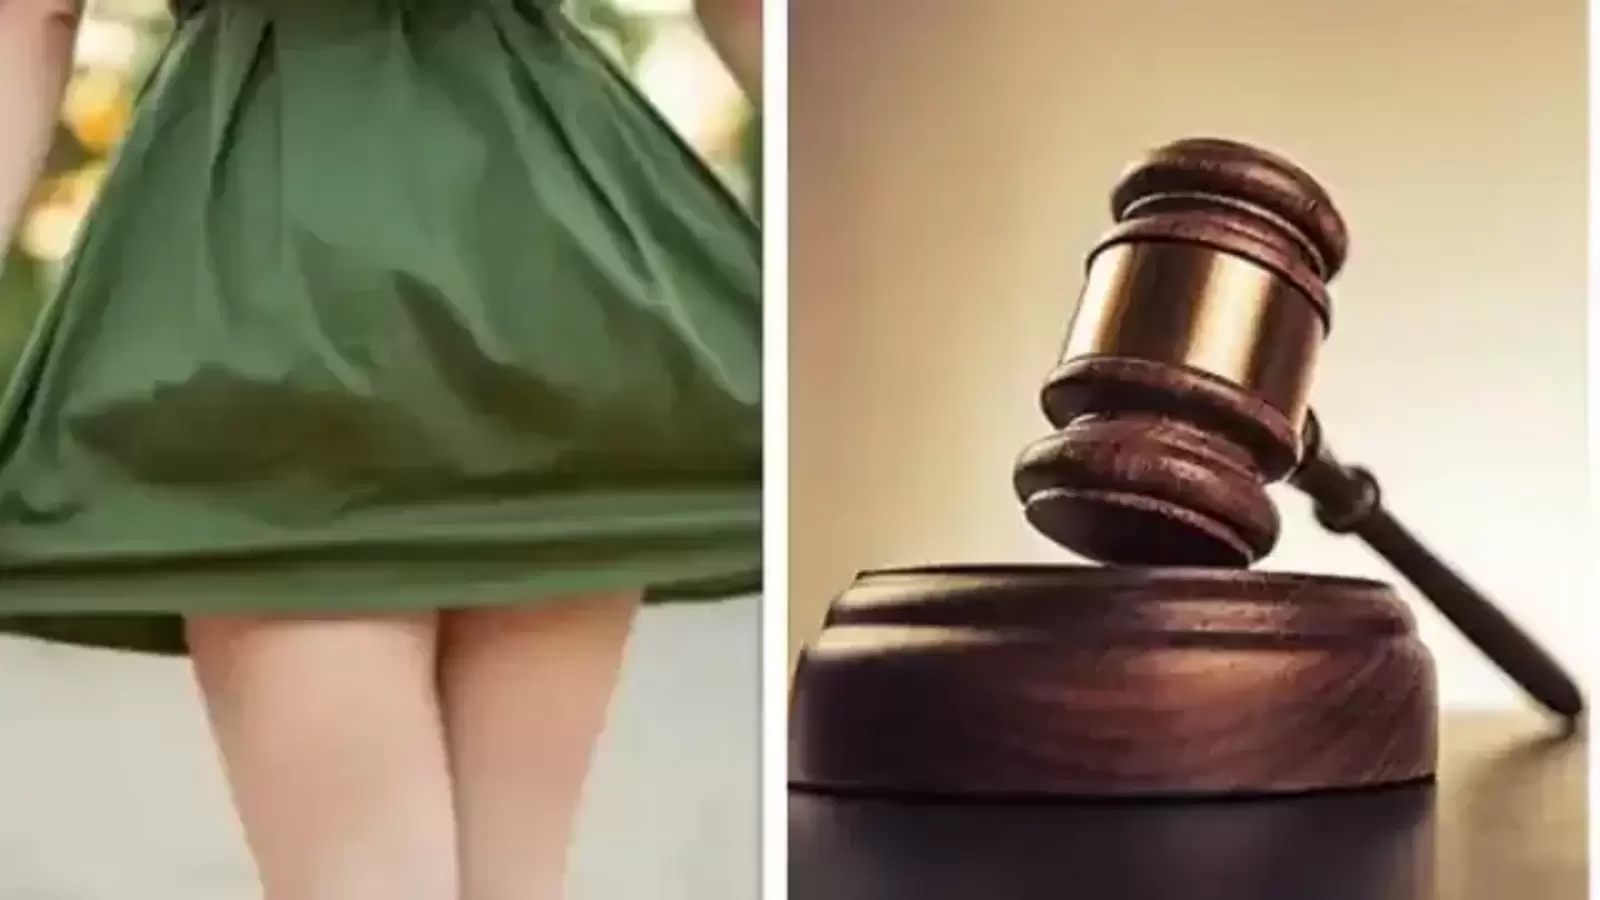 Transfer Order] [Kerala High Court] [Justice Sivaraman] [Judicial Review] [ Judicial Officer] [Higher Judiciary][Sexually Provocative Clothes]